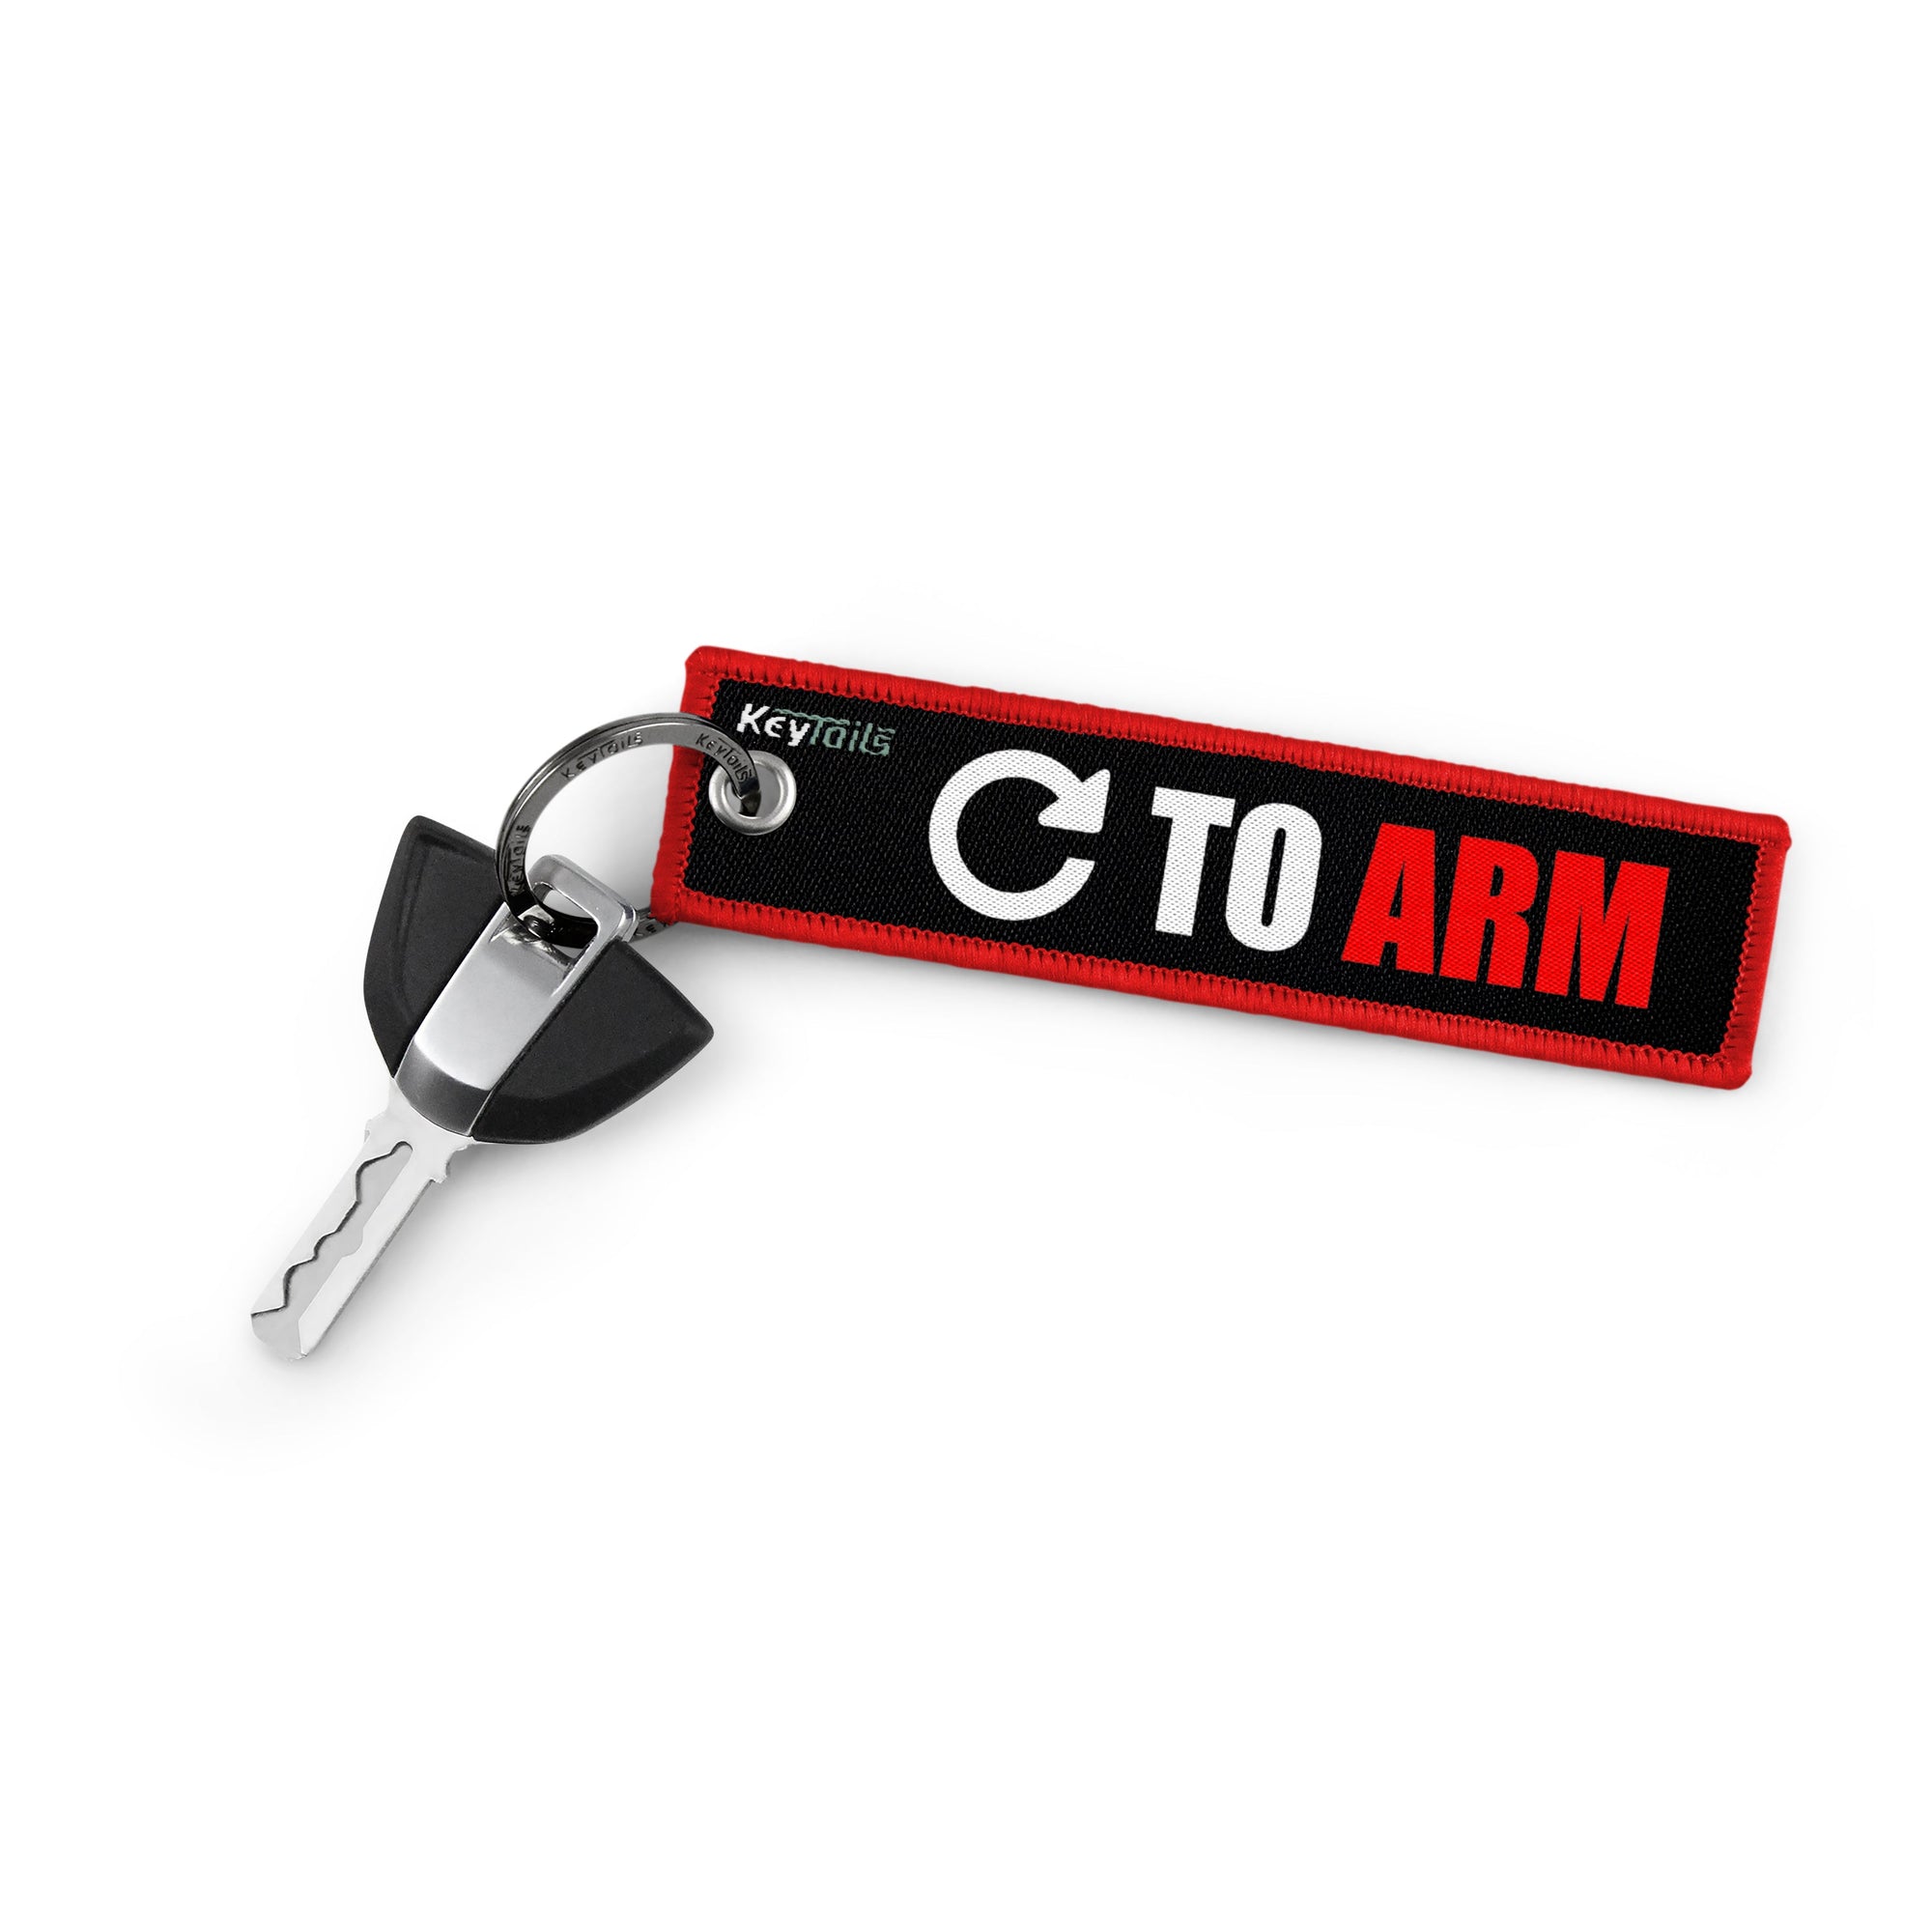 Turn To Arm Keychain, Key Tag - Red